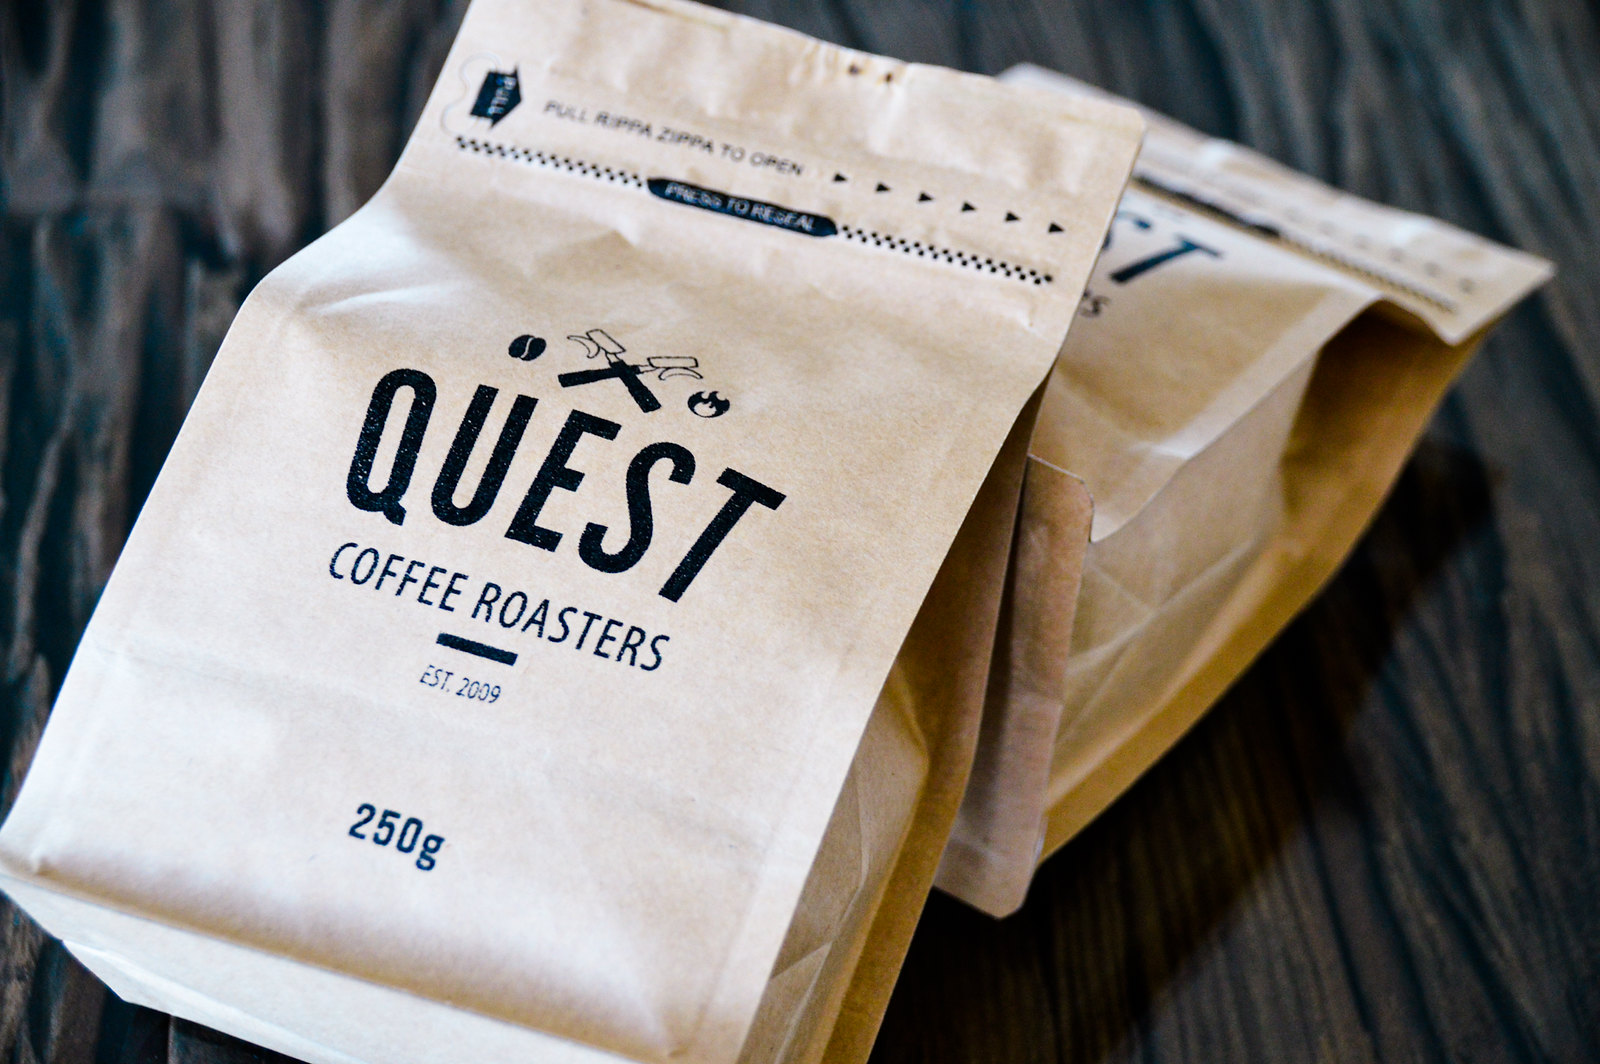 Burleigh Quest Coffee Roasters